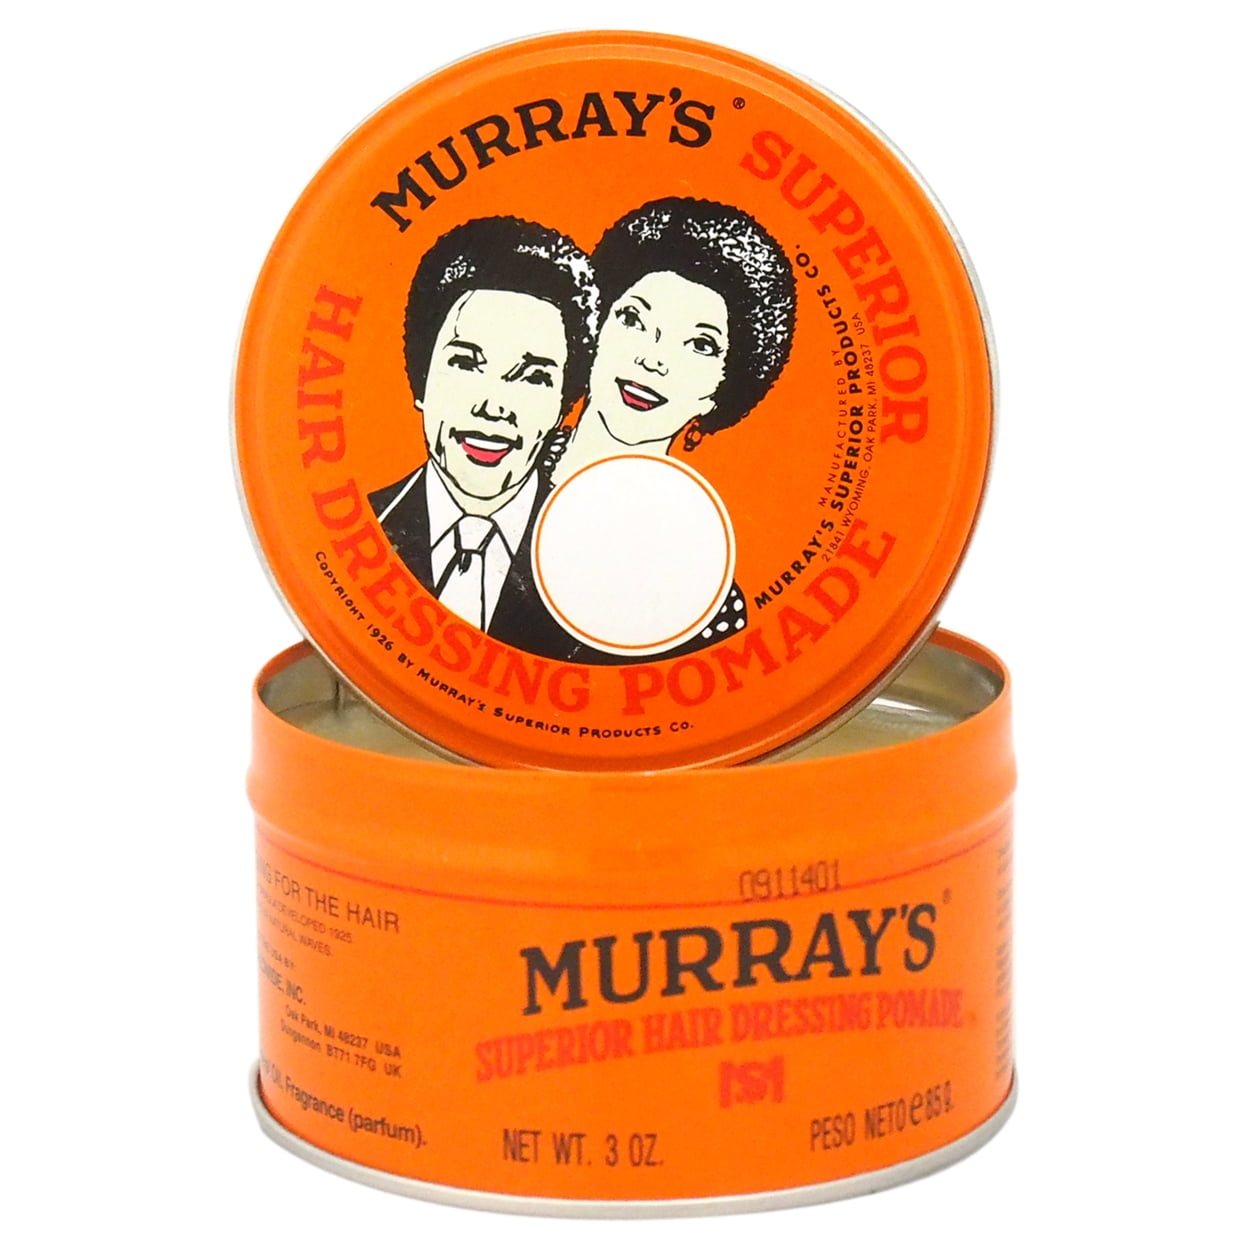 3 oz Murray's Pomade Murrays Pomade Hair Dressing 883214136648 